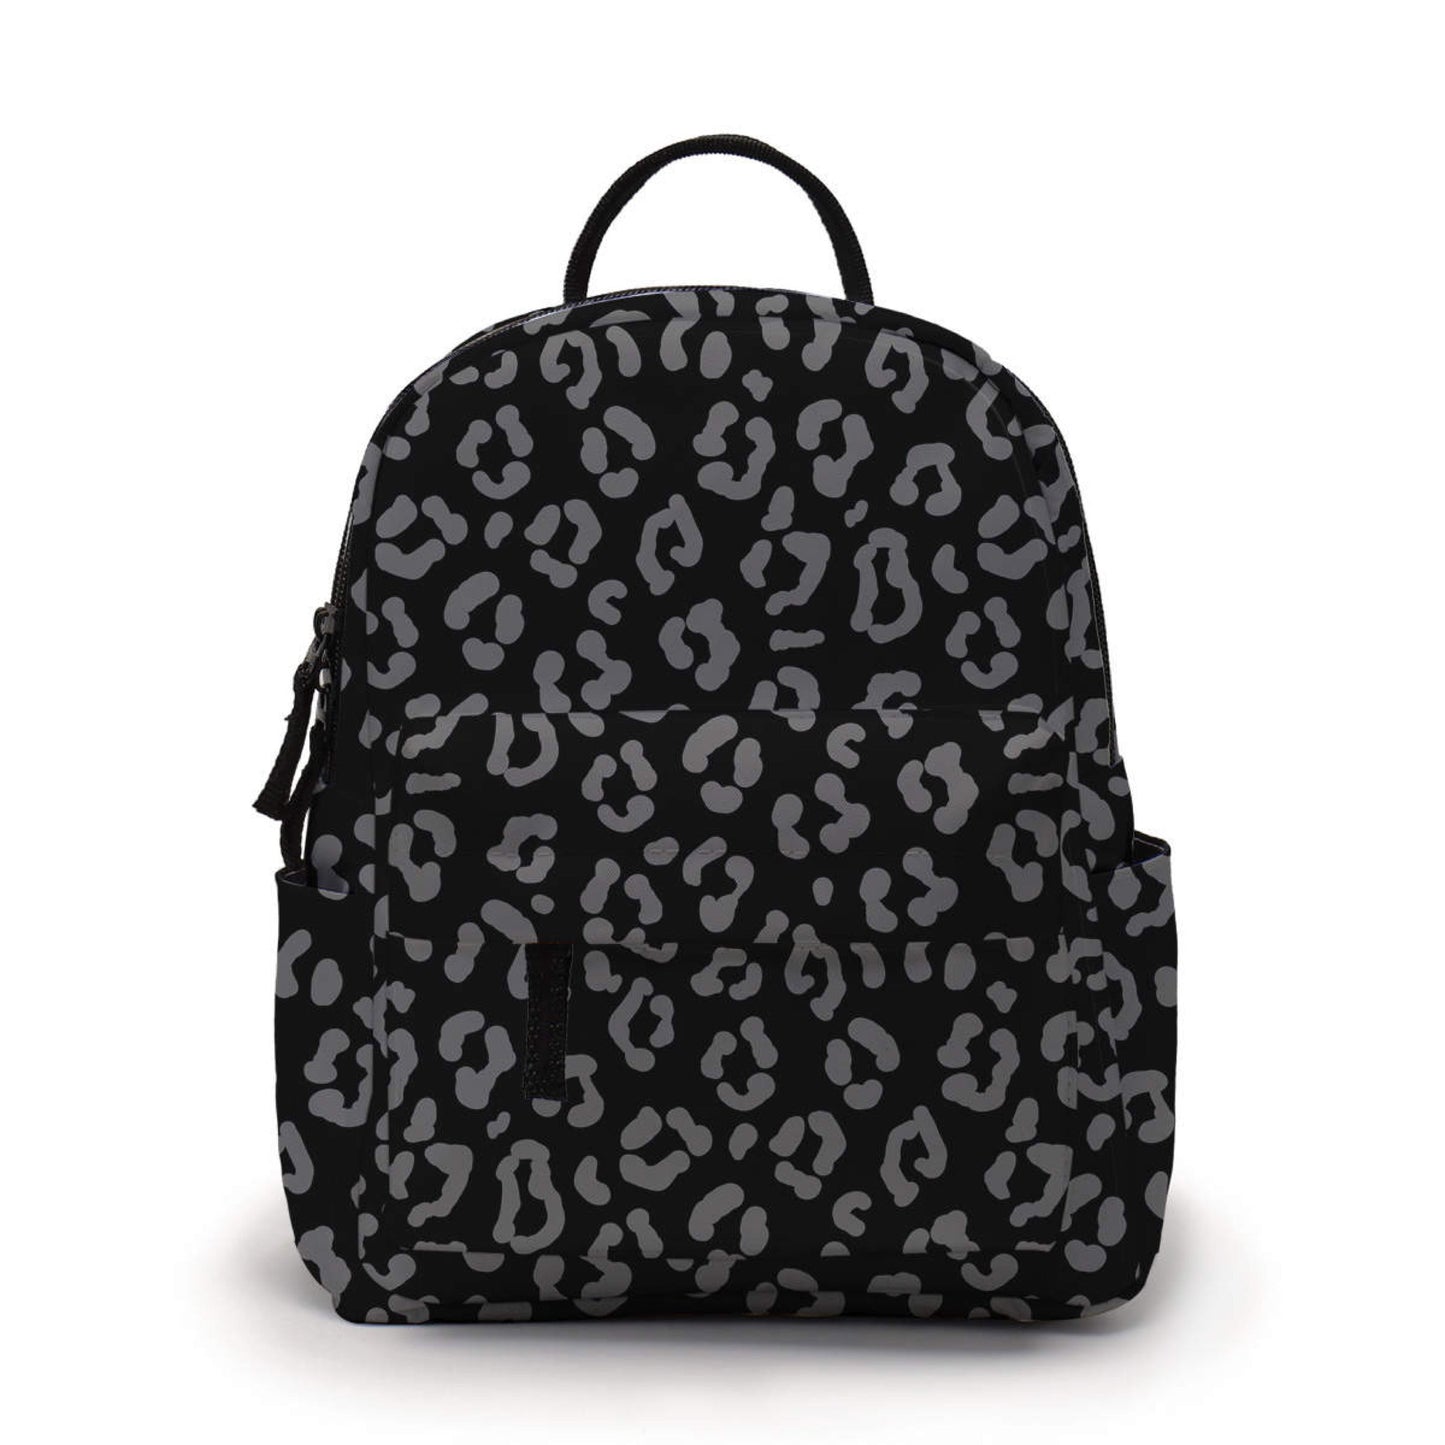 Mini Backpack - Animal Print, Black & Grey Leopard